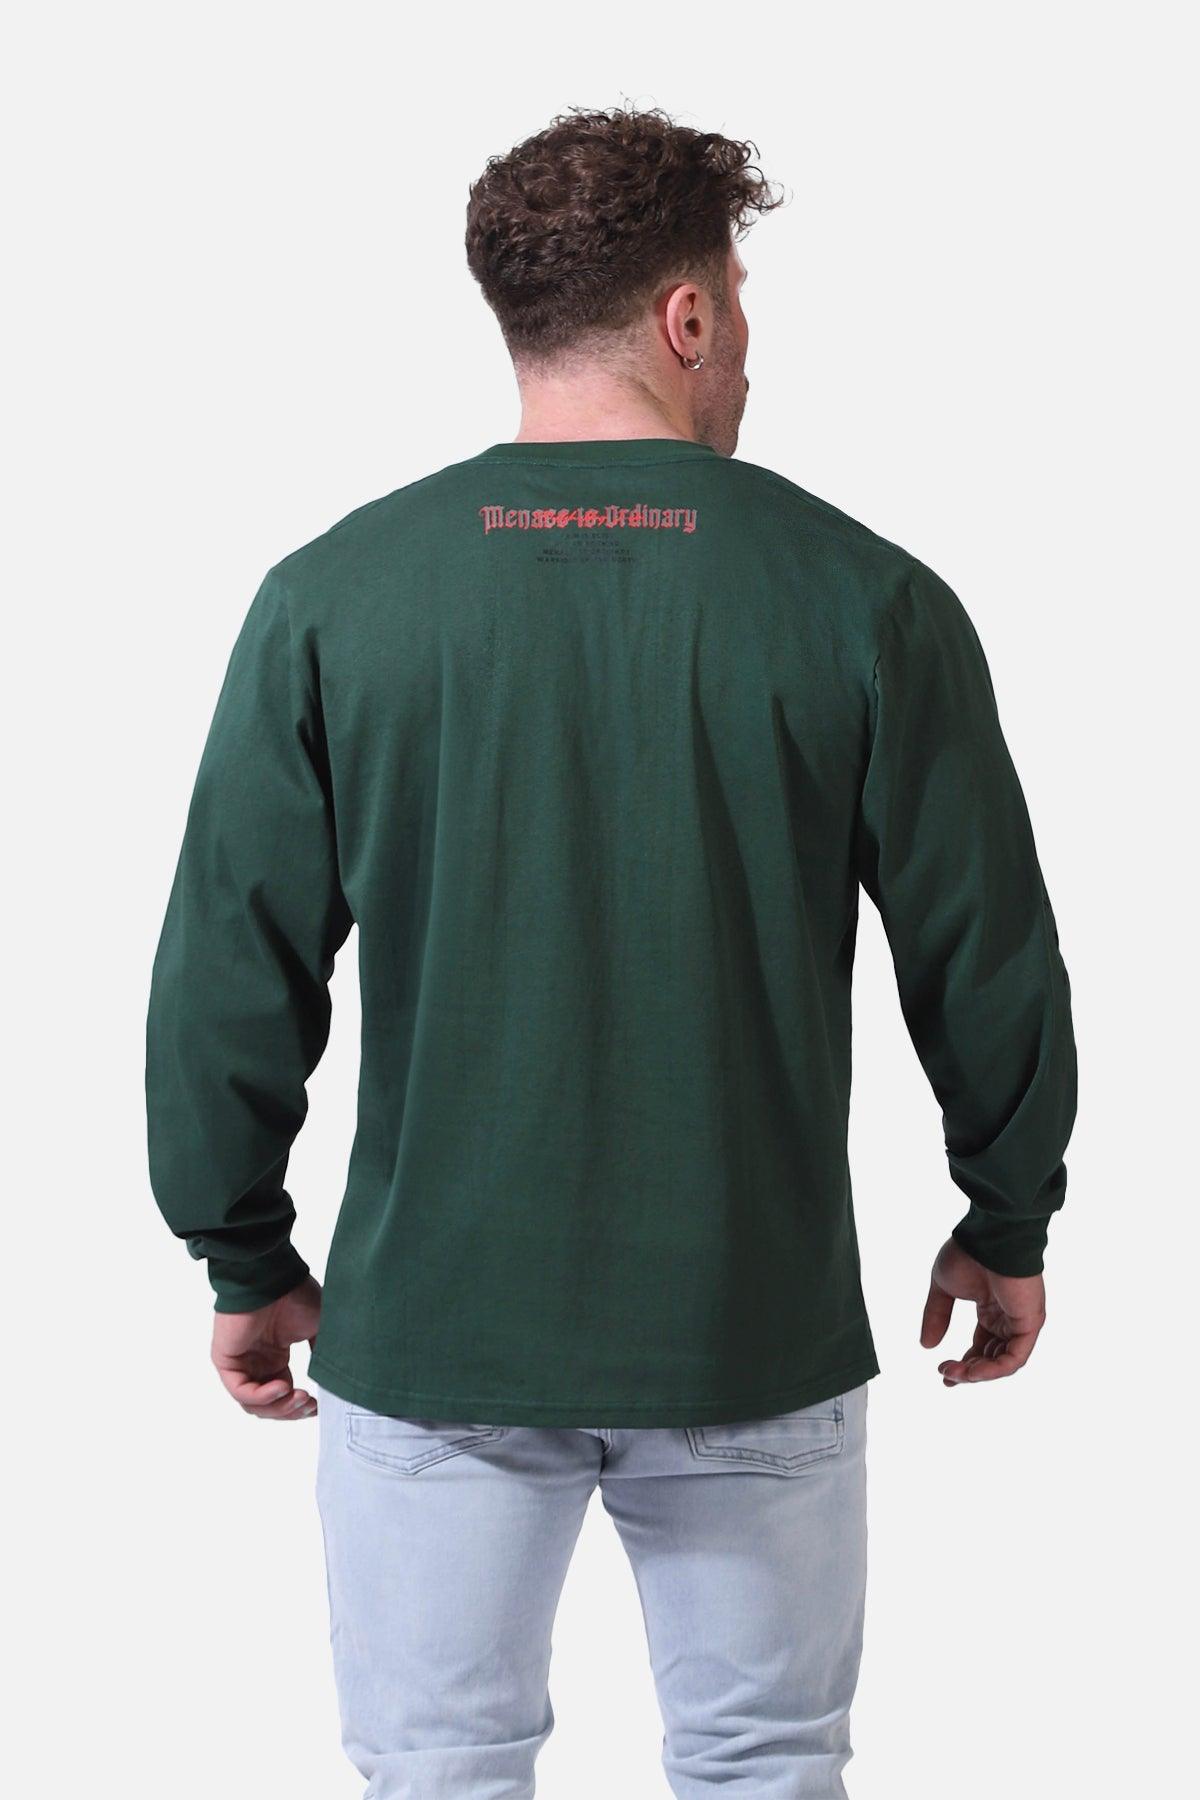 Retro Gym Long Sleeve T-Shirt - Dark Green - Jed North